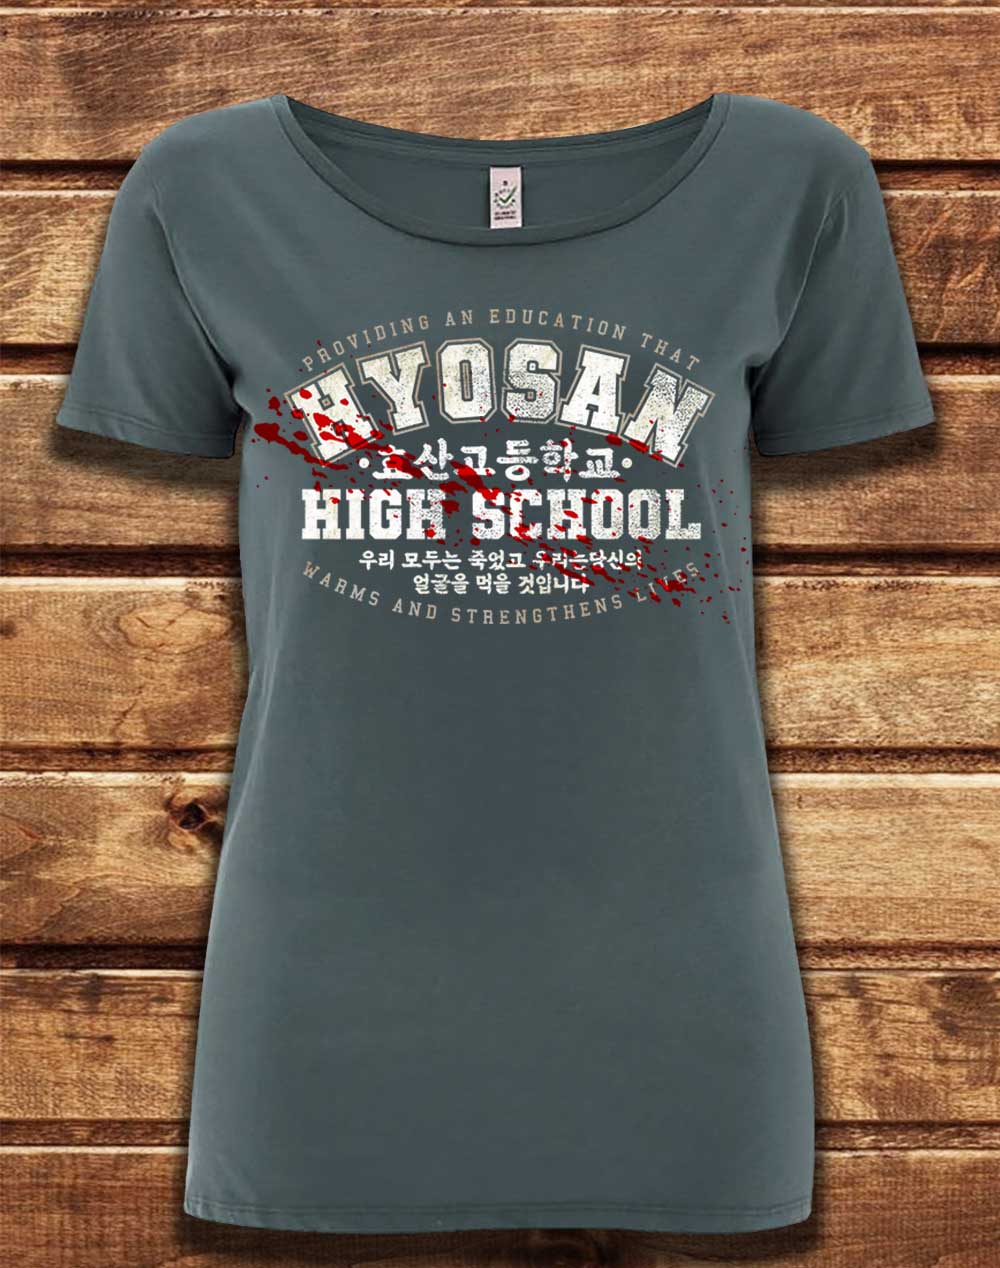 Light Charcoal - DELUXE Hyosan High School Organic Scoop Neck T-Shirt